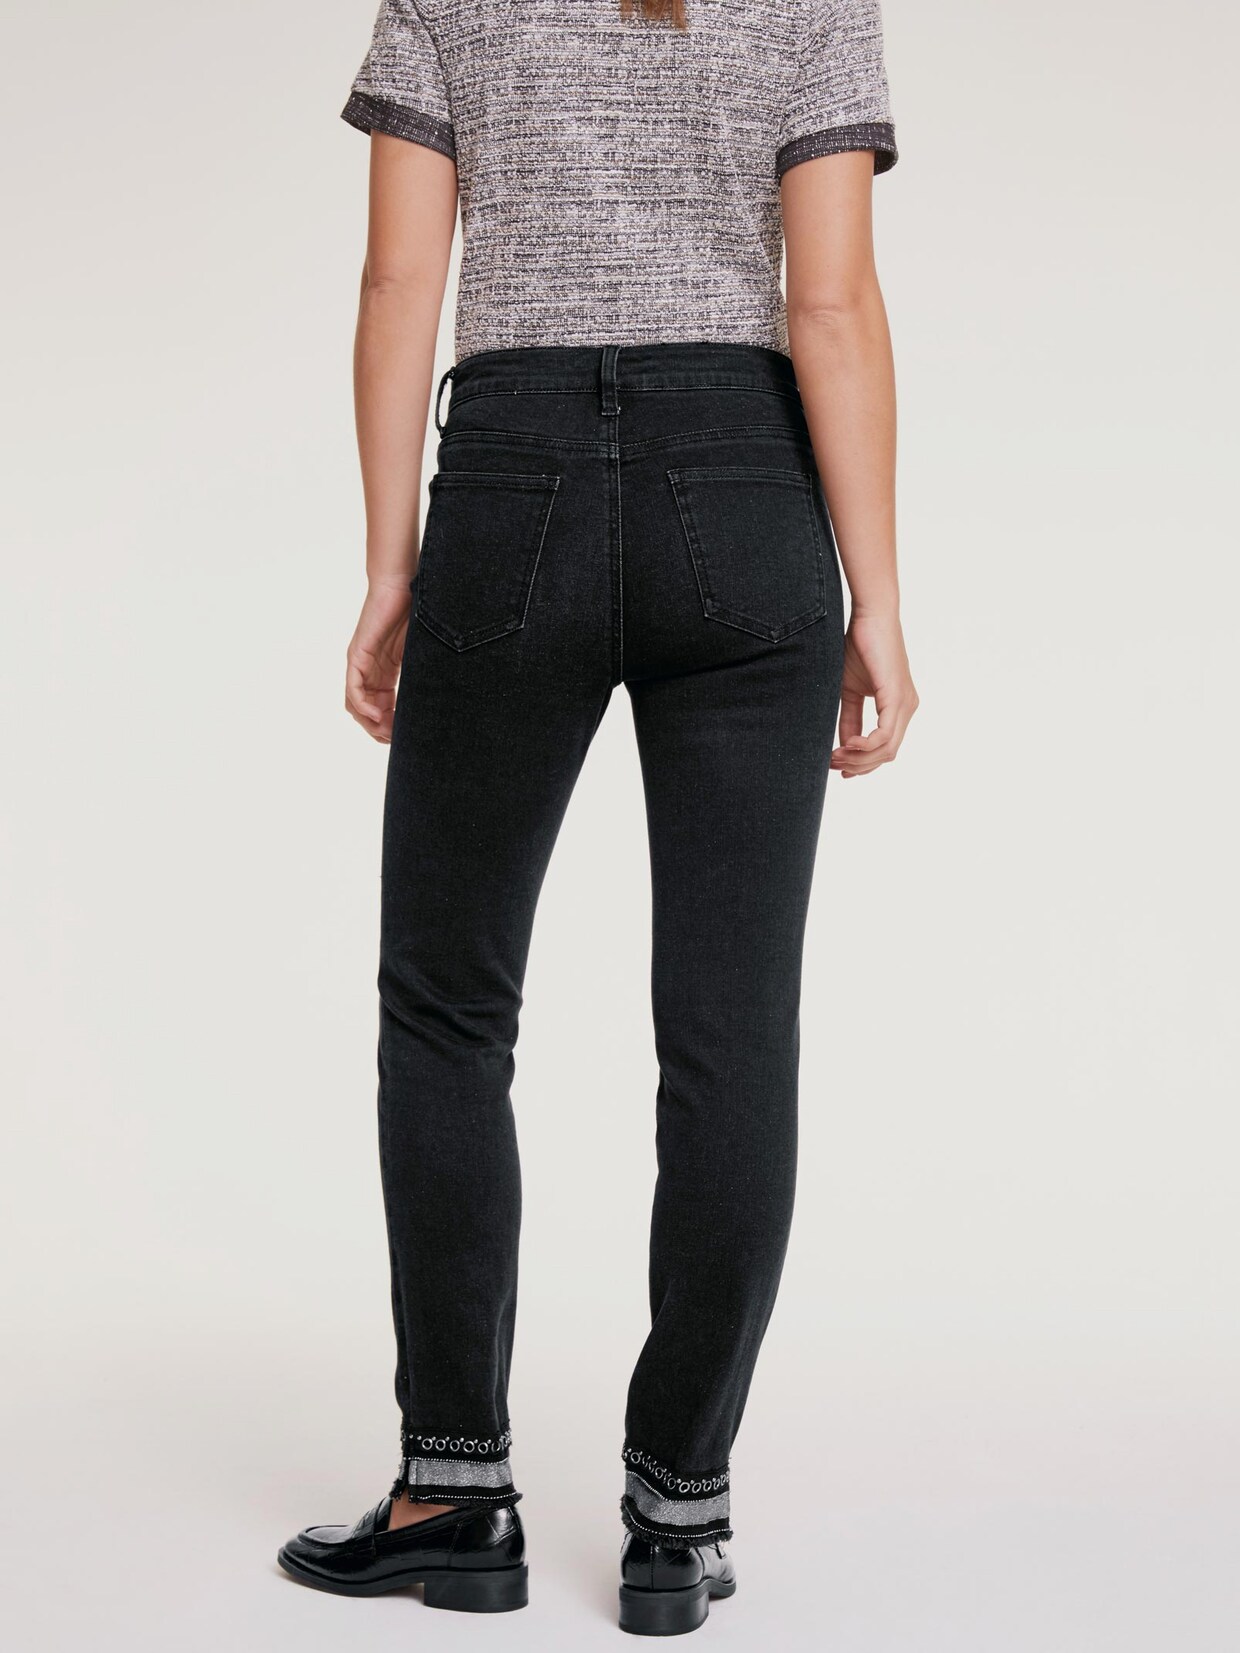 Ashley Brooke 'Buik weg'-jeans - black denim